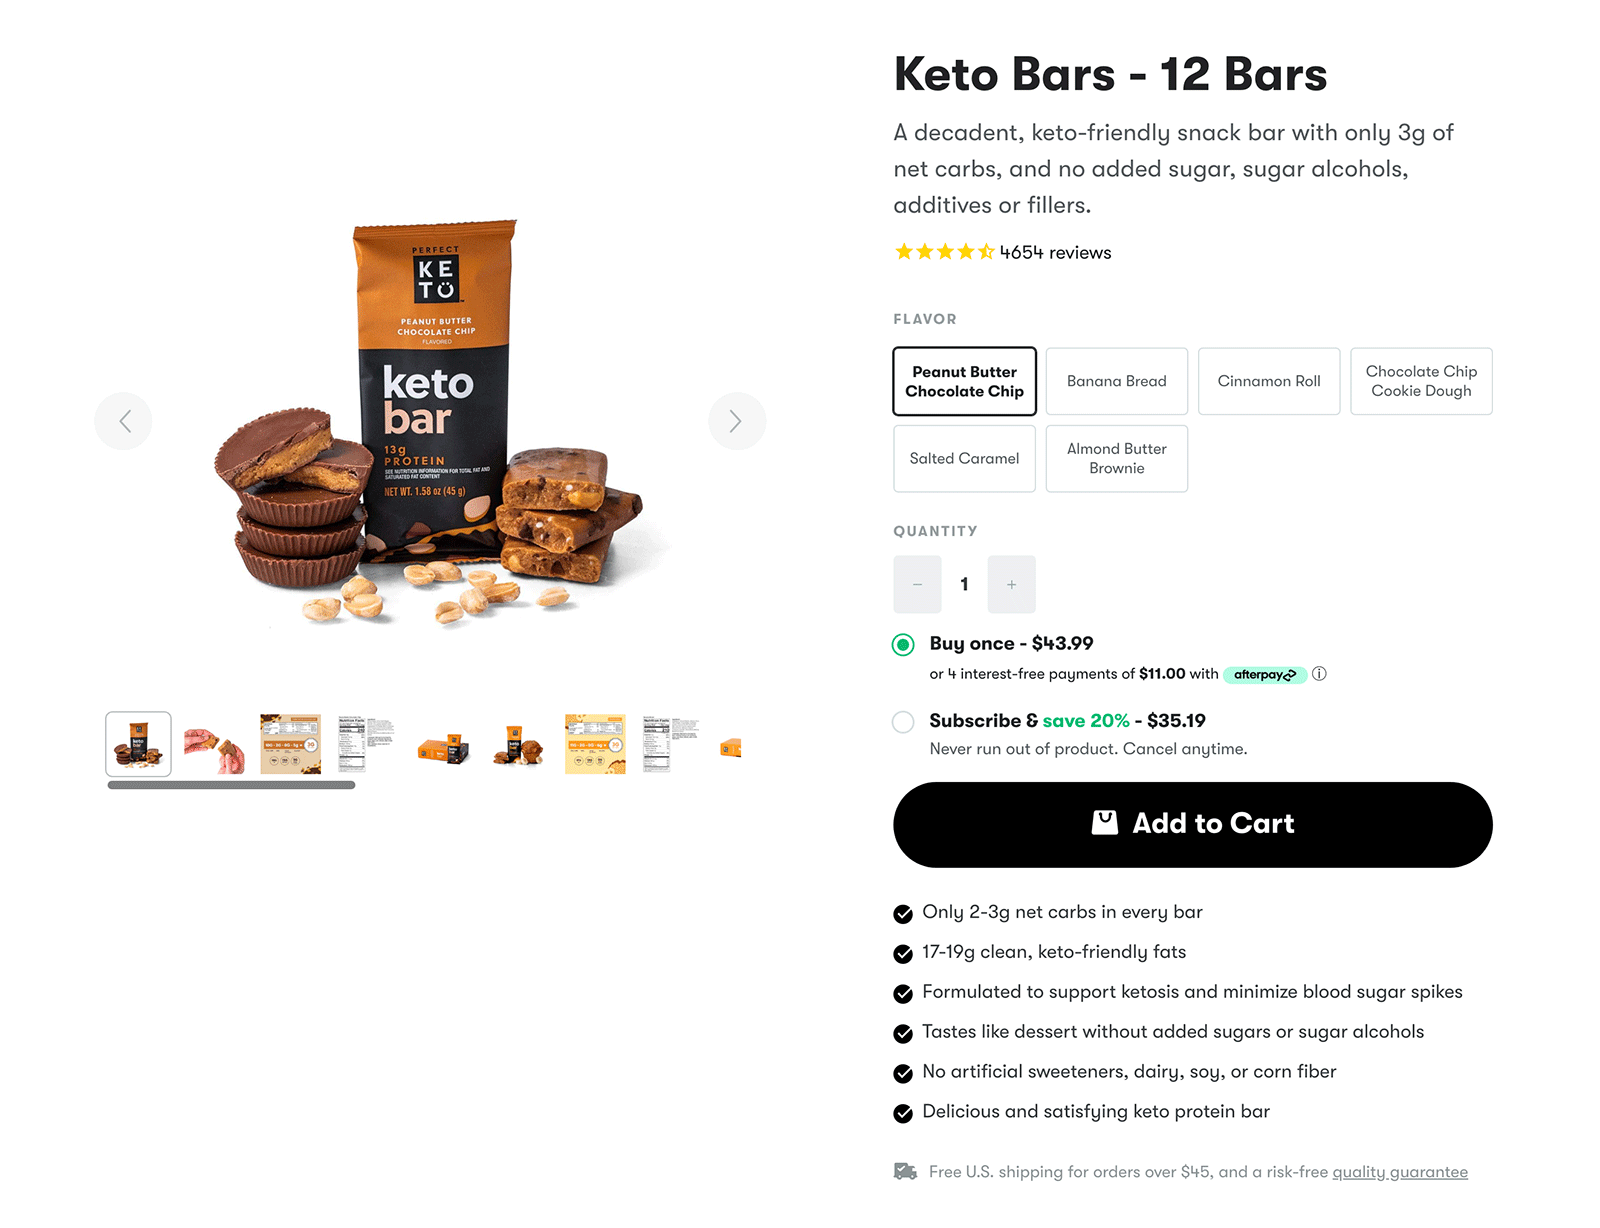 Keto Bars product page